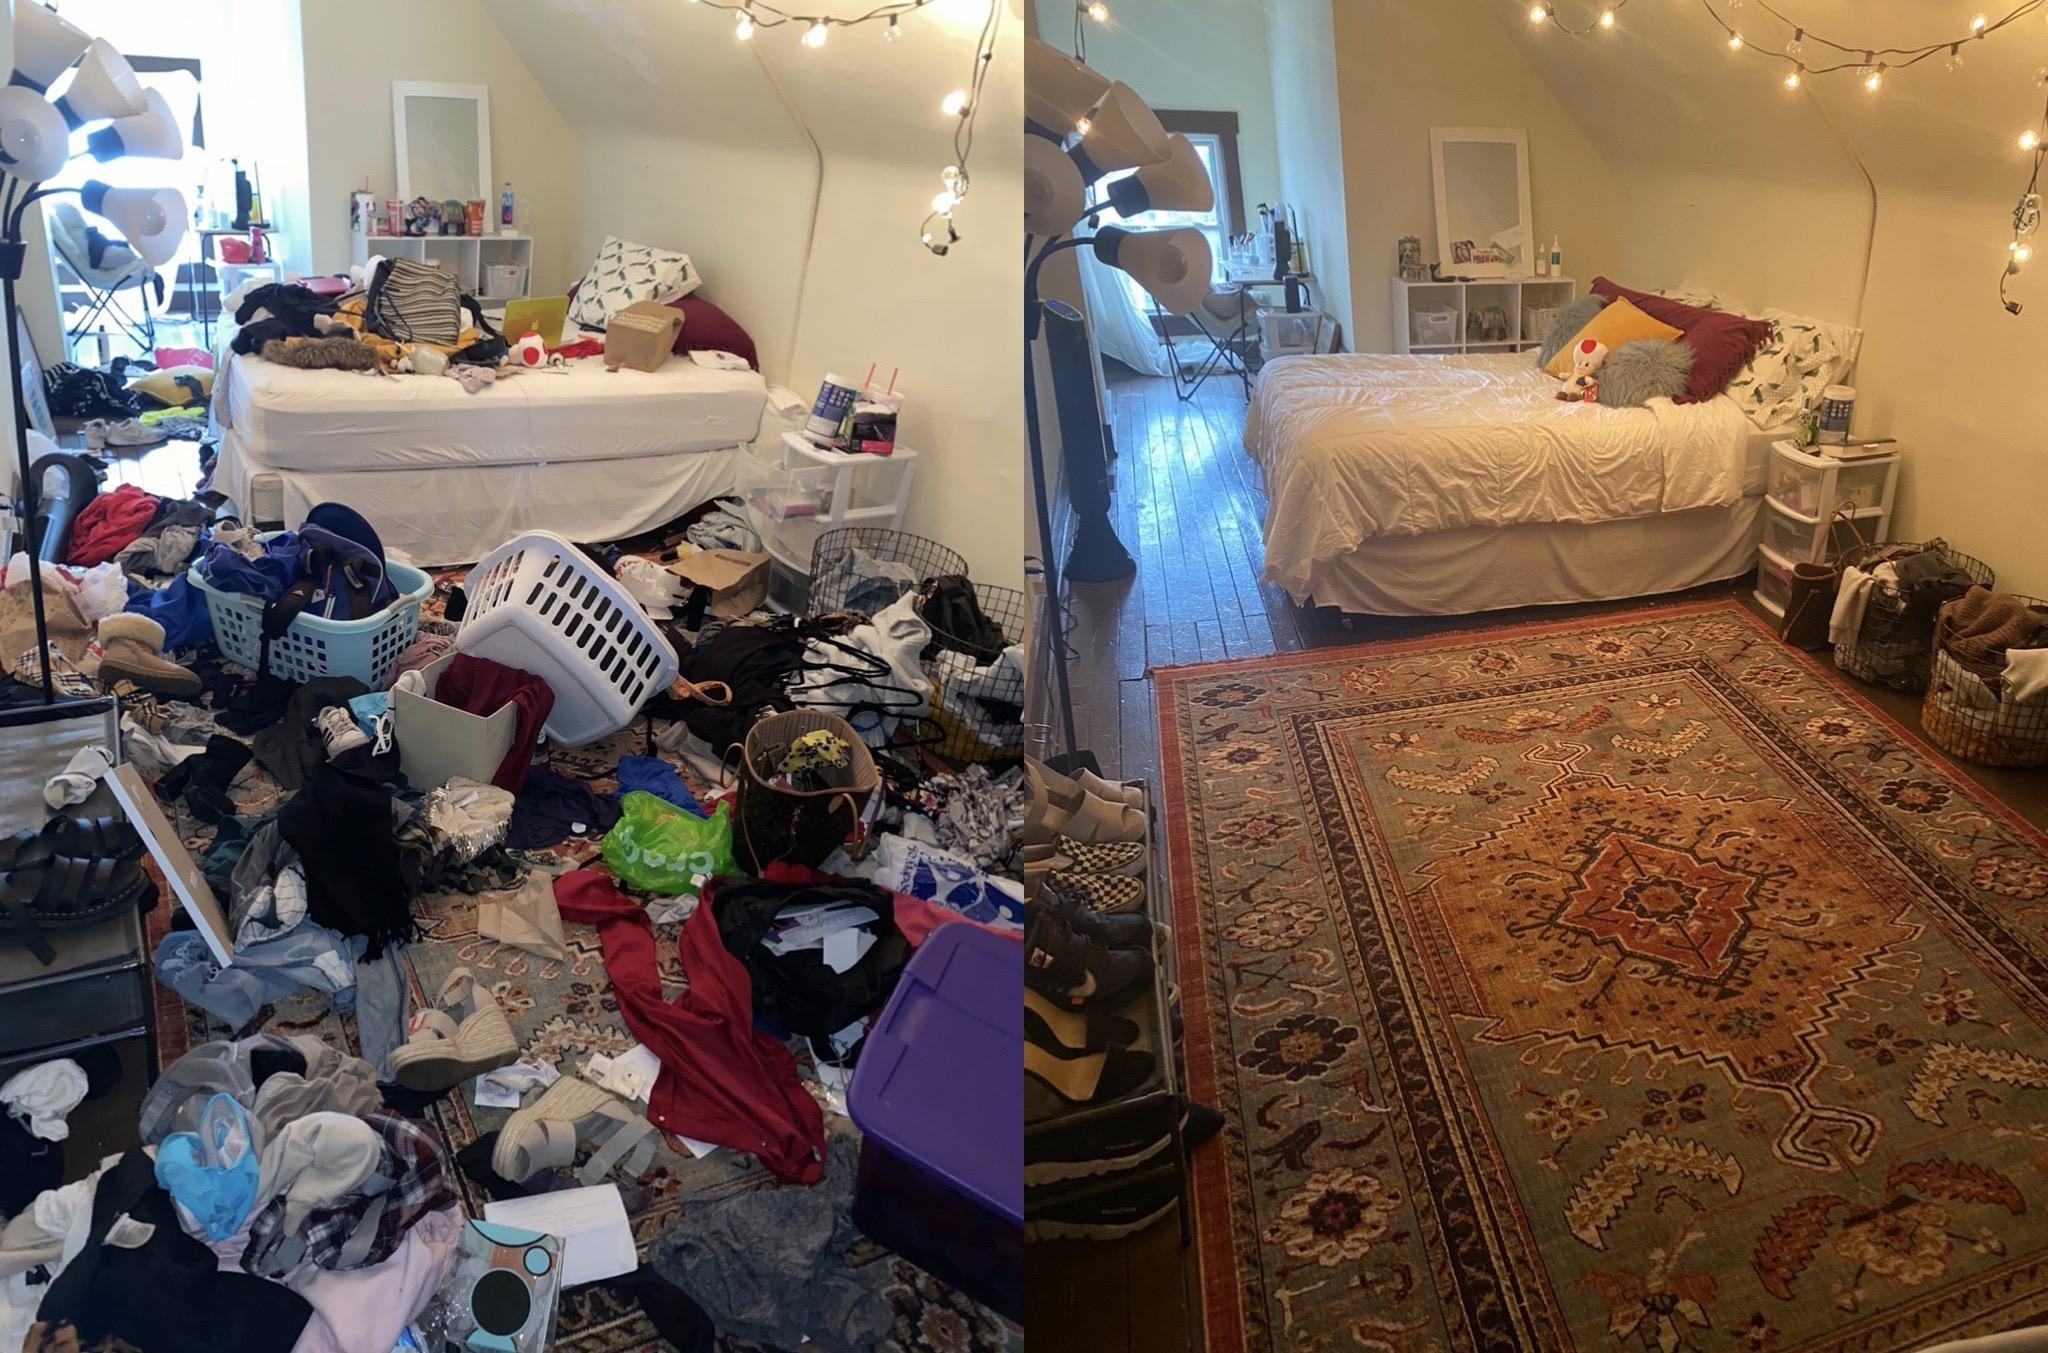 Clean up the mess. Комната до и после уборки. Беспорядок в комнате до и после. Бардак в комнате до и после. Уборка квартир до и после.